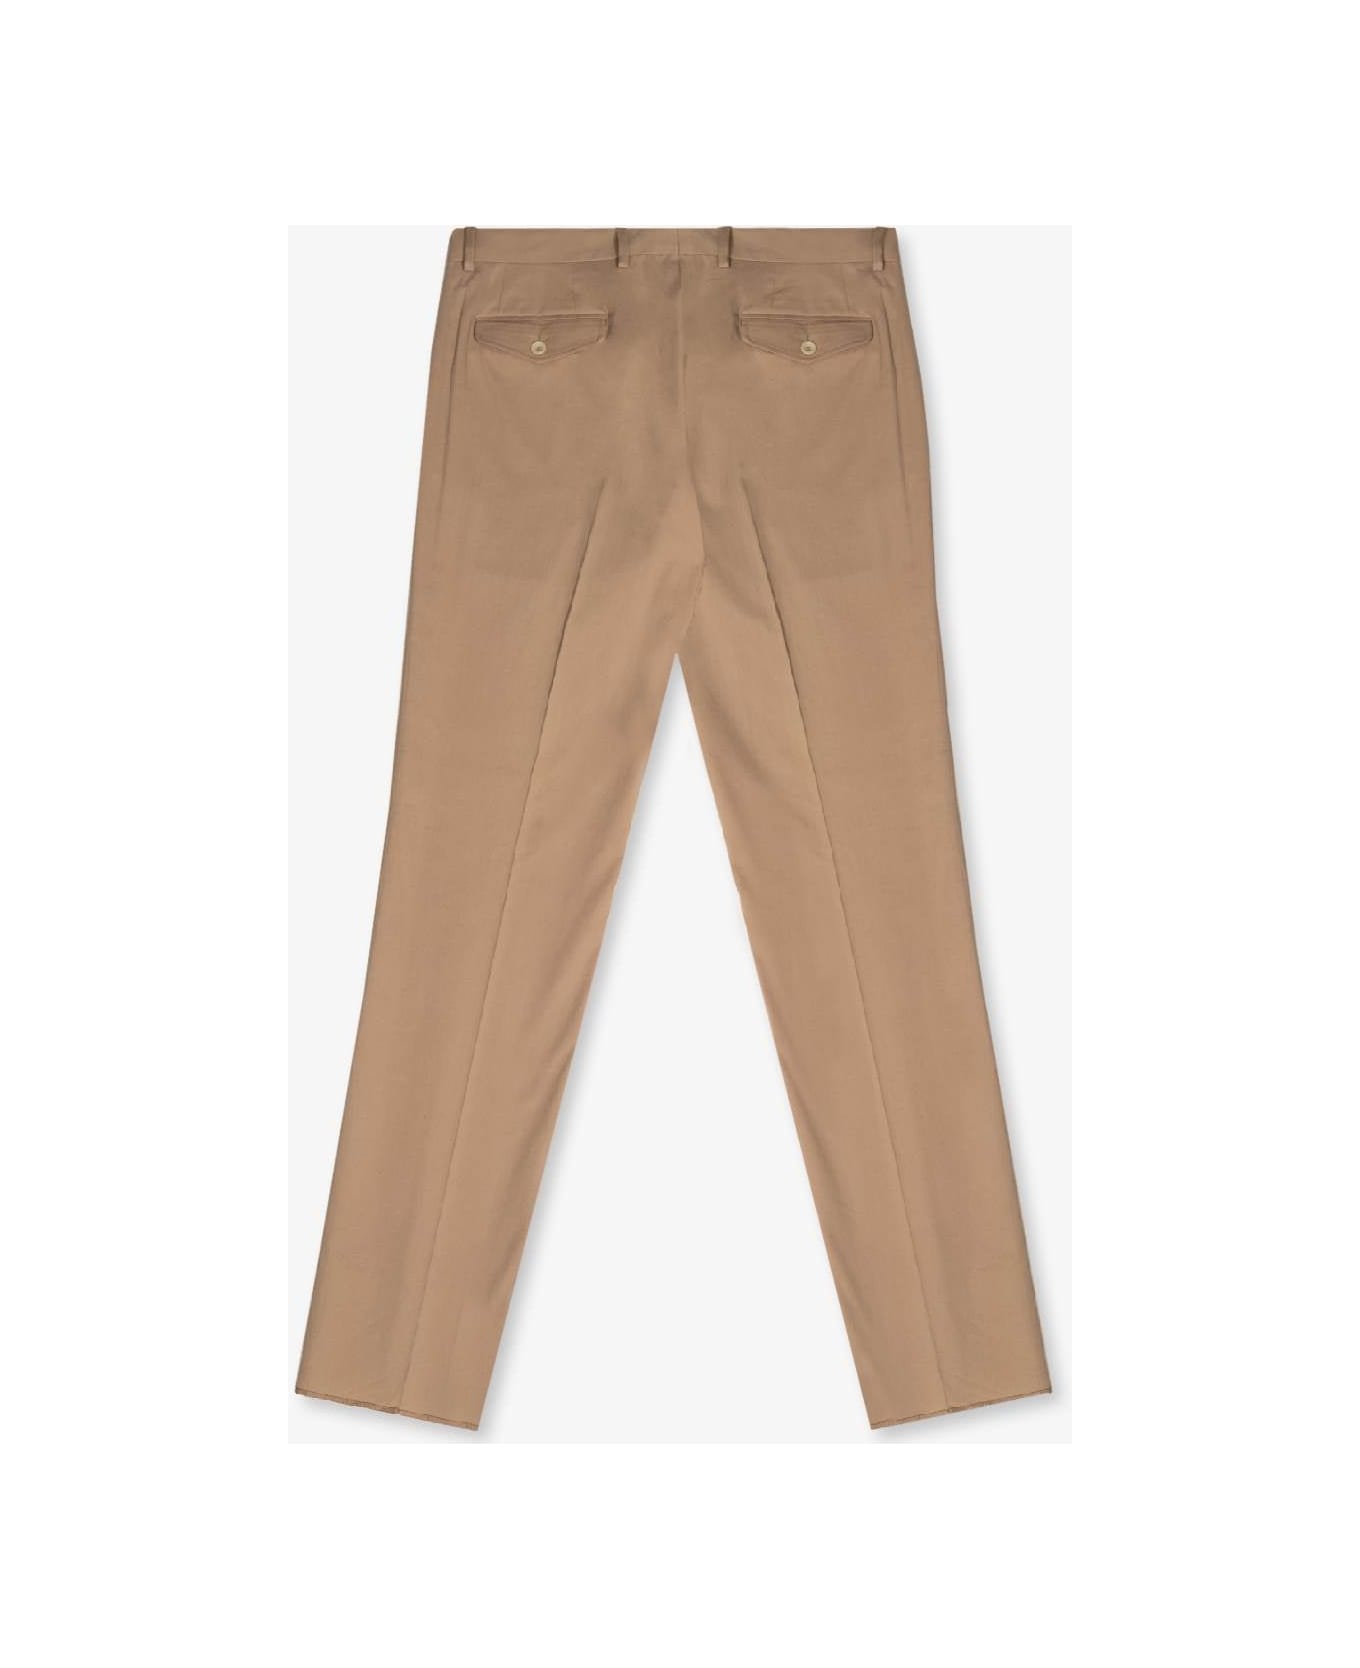 Larusmiani Chino Trousers Pants - Beige